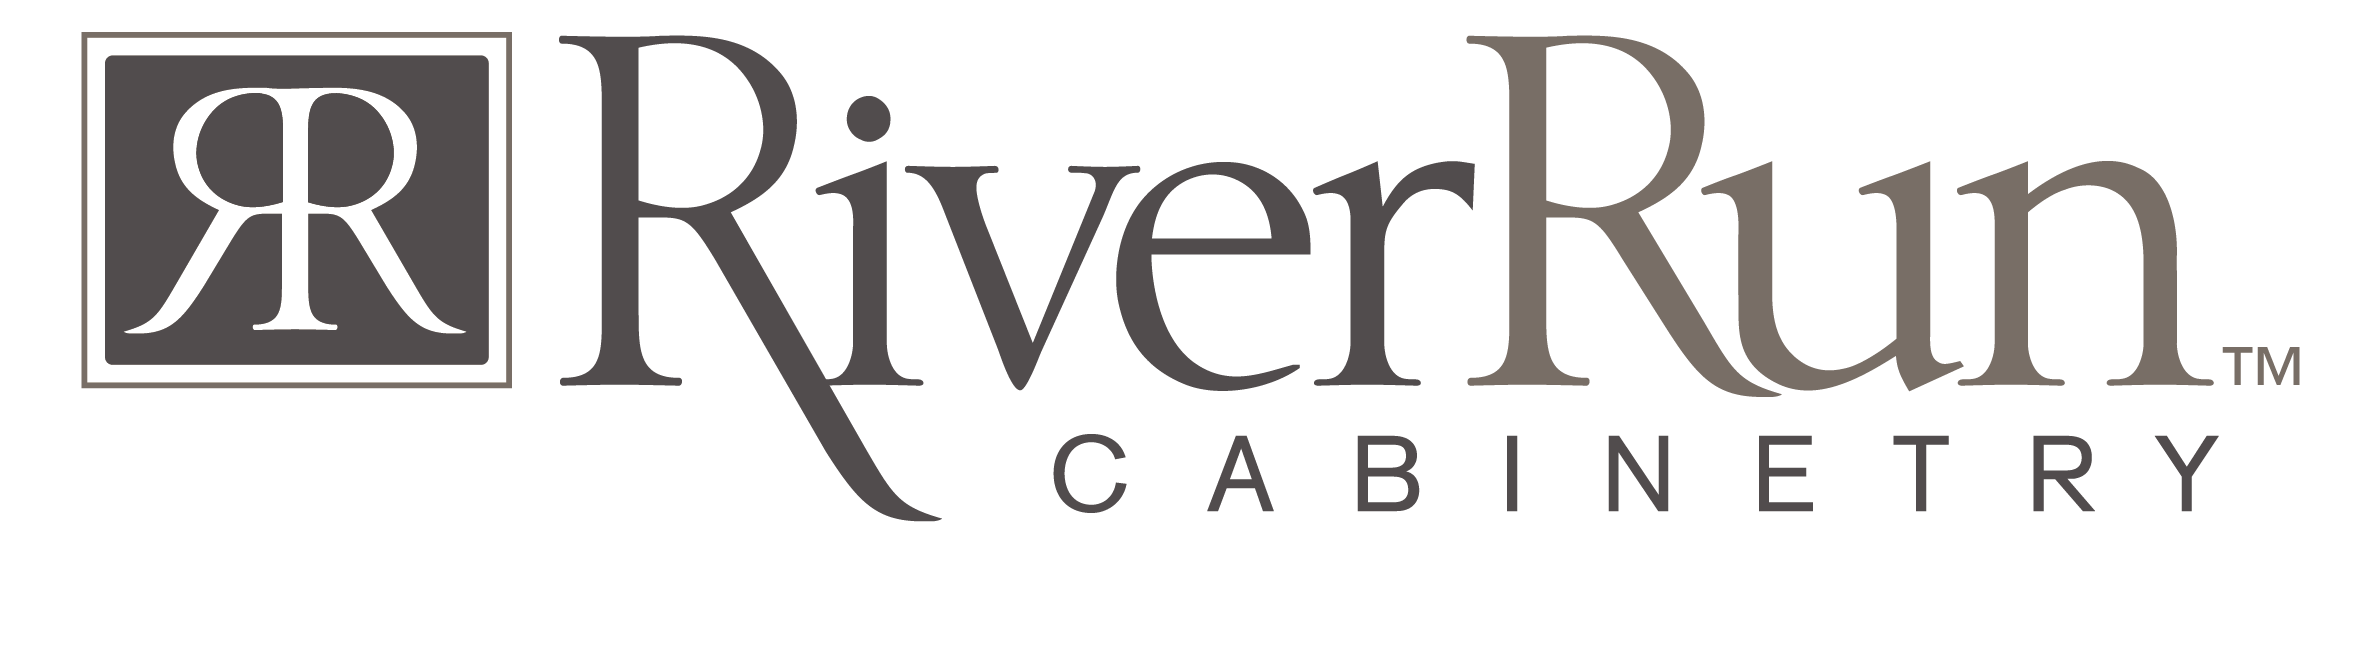 RiverRun Cabinetry Online Order System